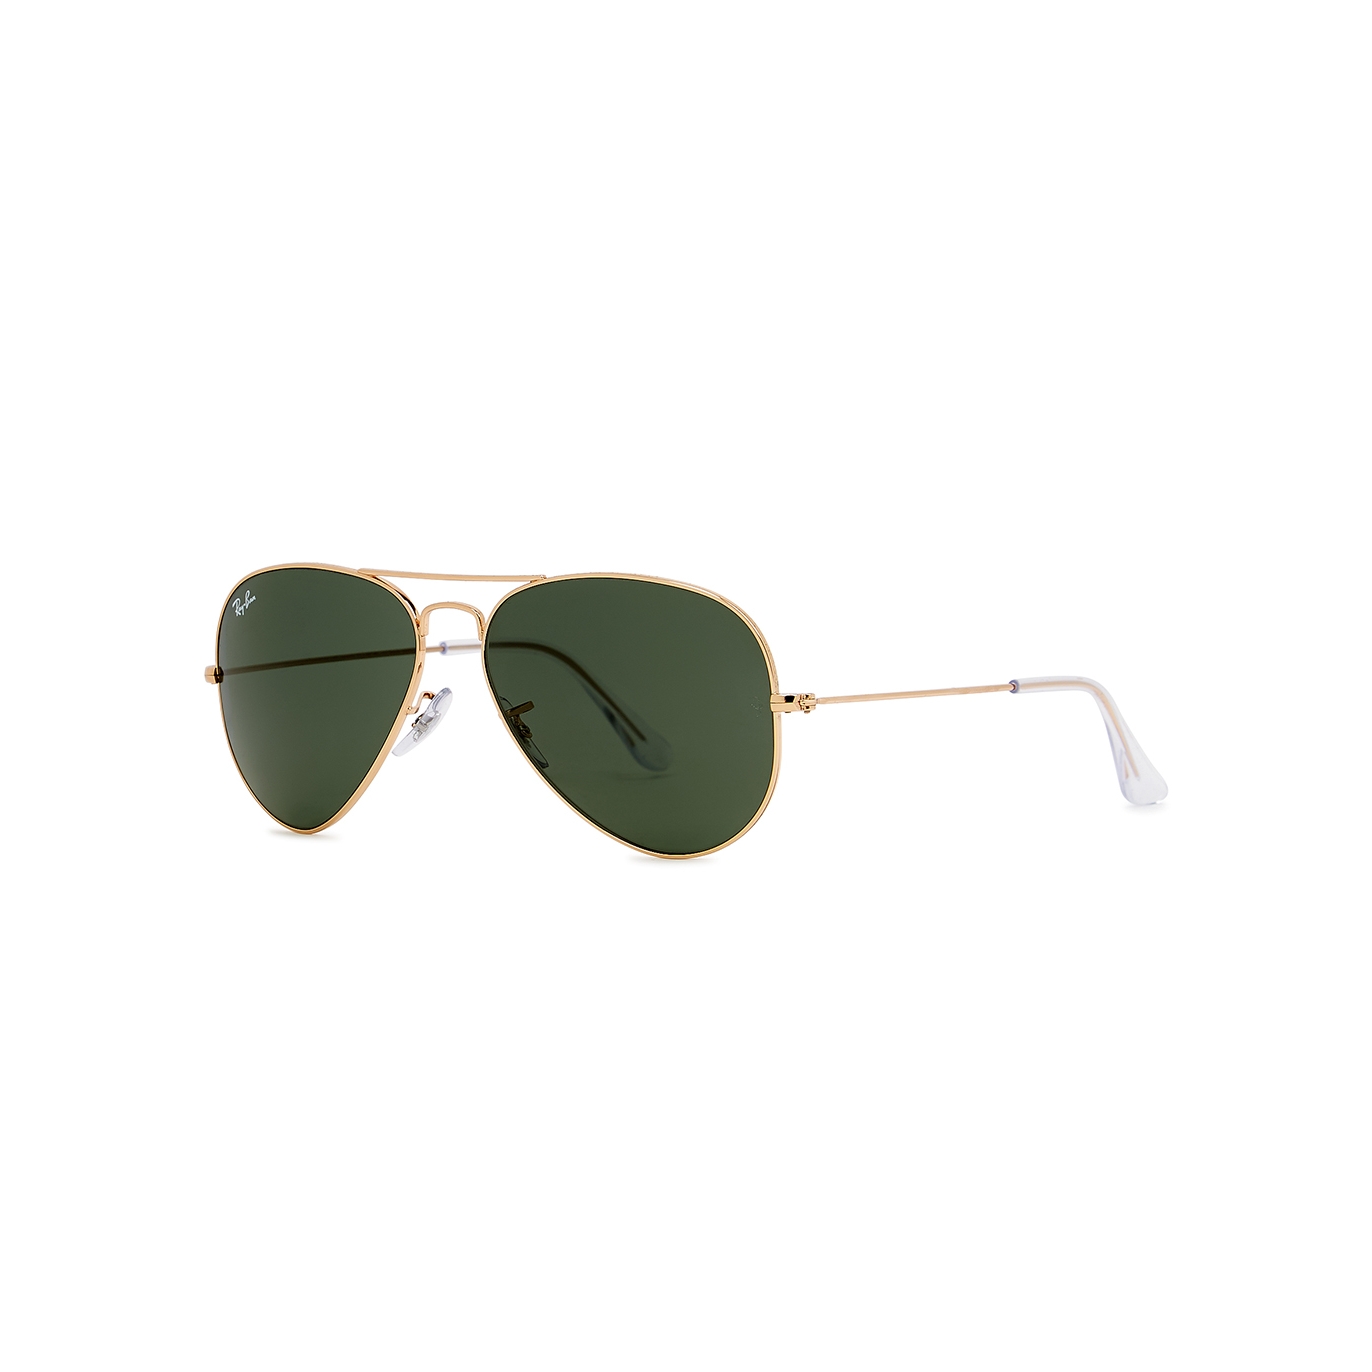 Ray-Ban Gold-tone Aviator Sunglasses, Sunglasses, Green Lenses